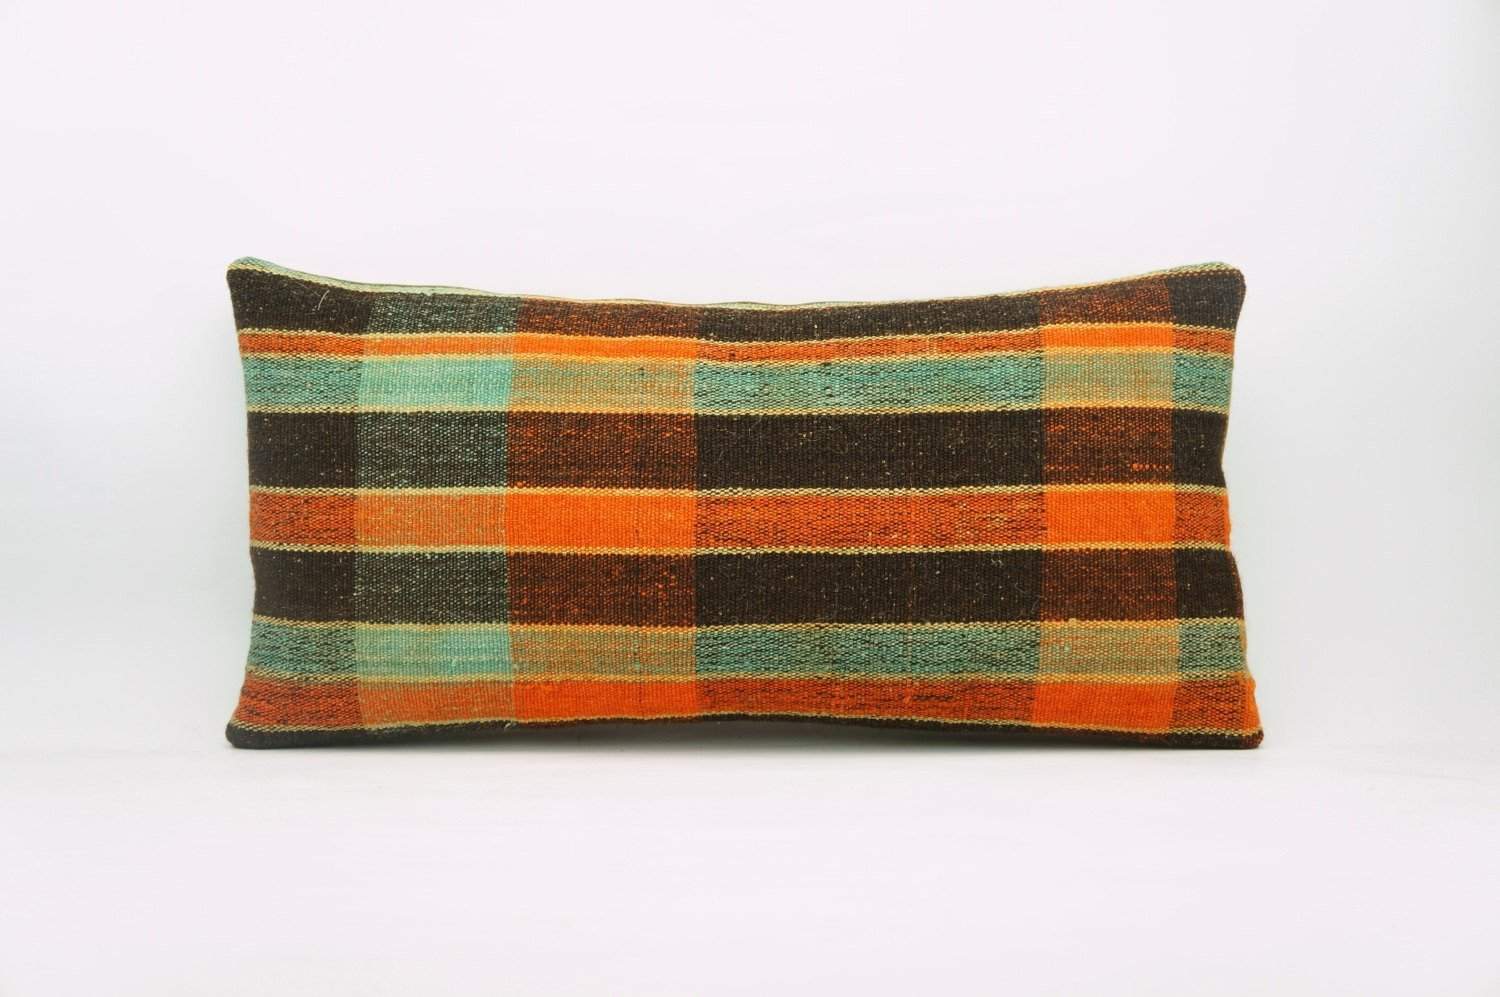 12x24 Vintage Hand Woven Kilim Pillow Lumbar Bohemian pillow case, Modern home decor  orange green brown  striped 974 - kilimpillowstore
 - 1